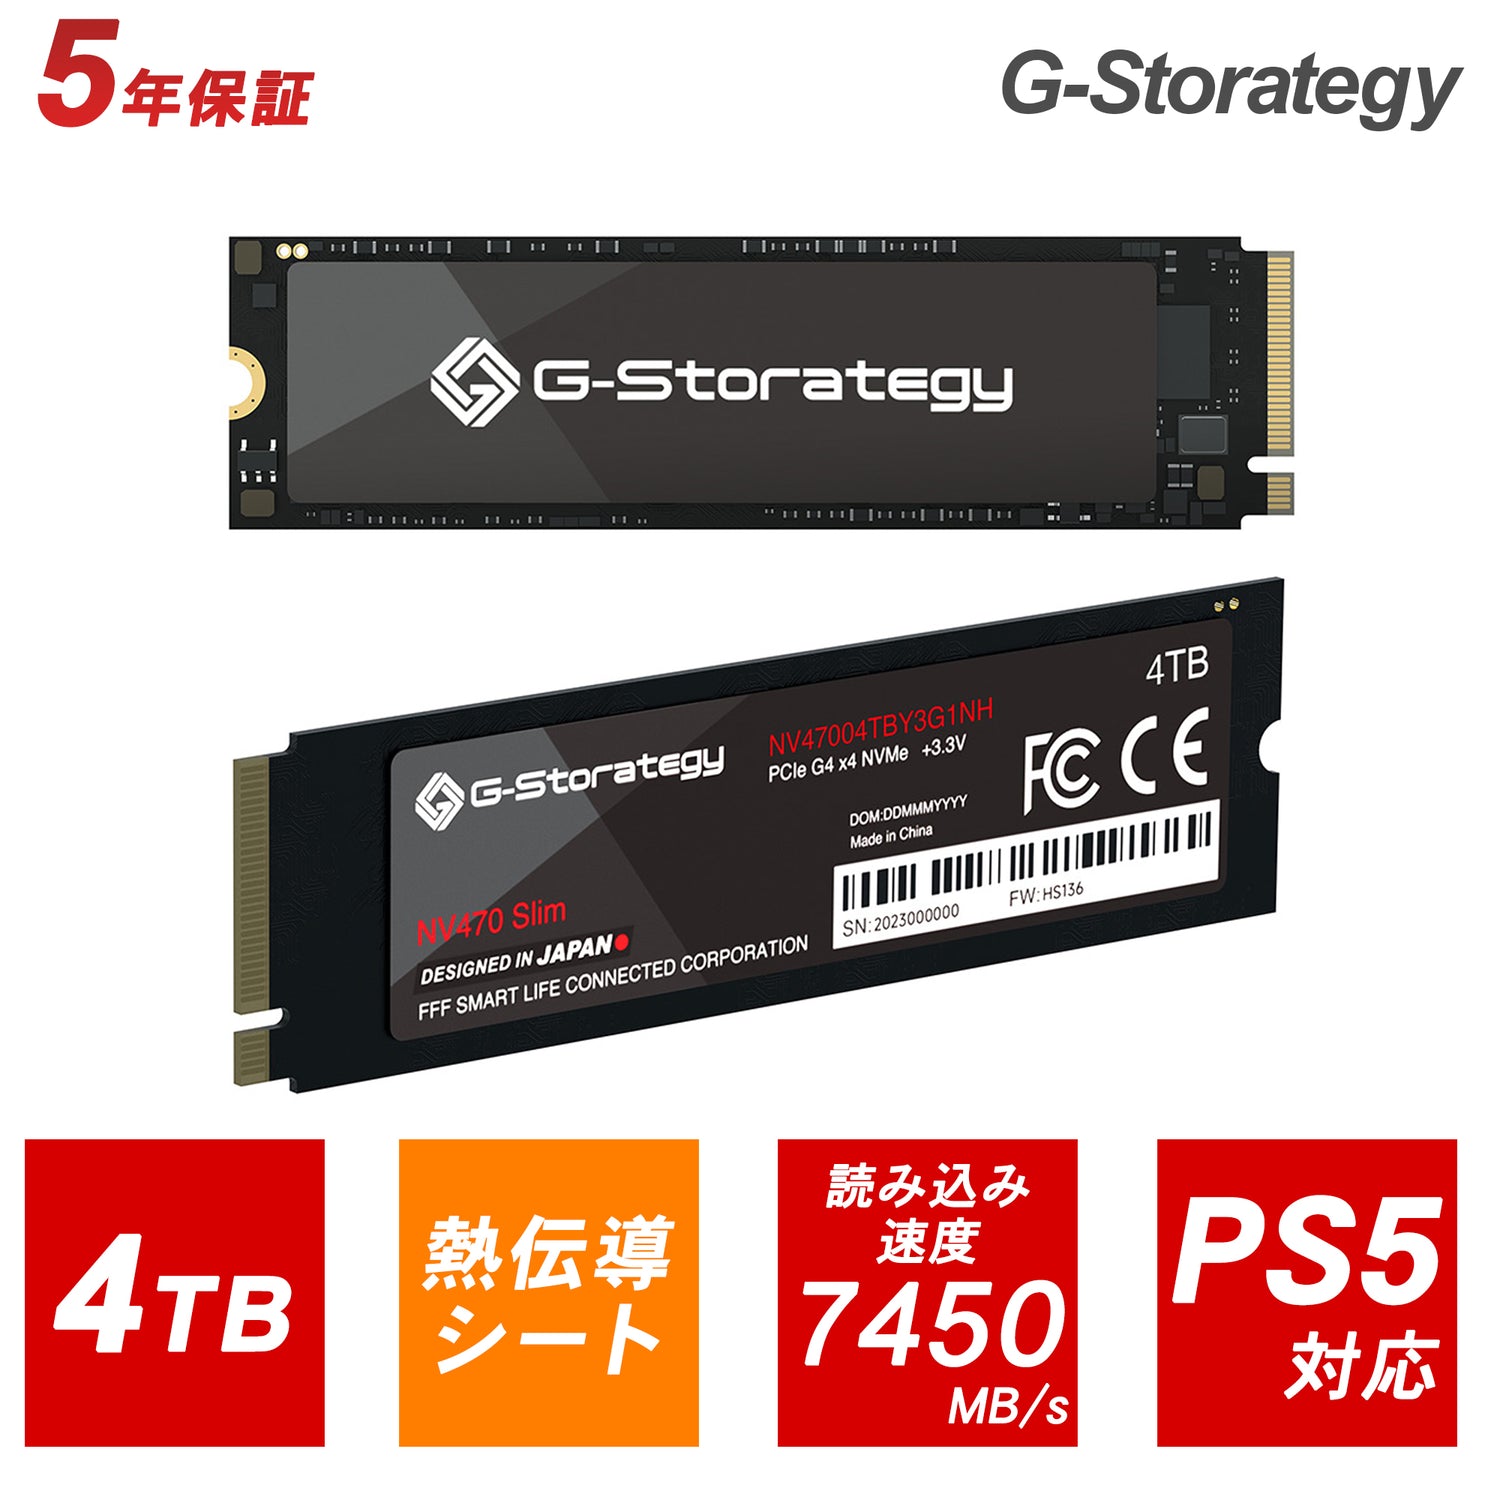 G-Storategy SSD 銅熱伝導シート 4TB PS5対応 Gen4×4 最大読込:7450MB/s 最大書込:6500MB/s 5年保証 NV47004TBY3G1NH